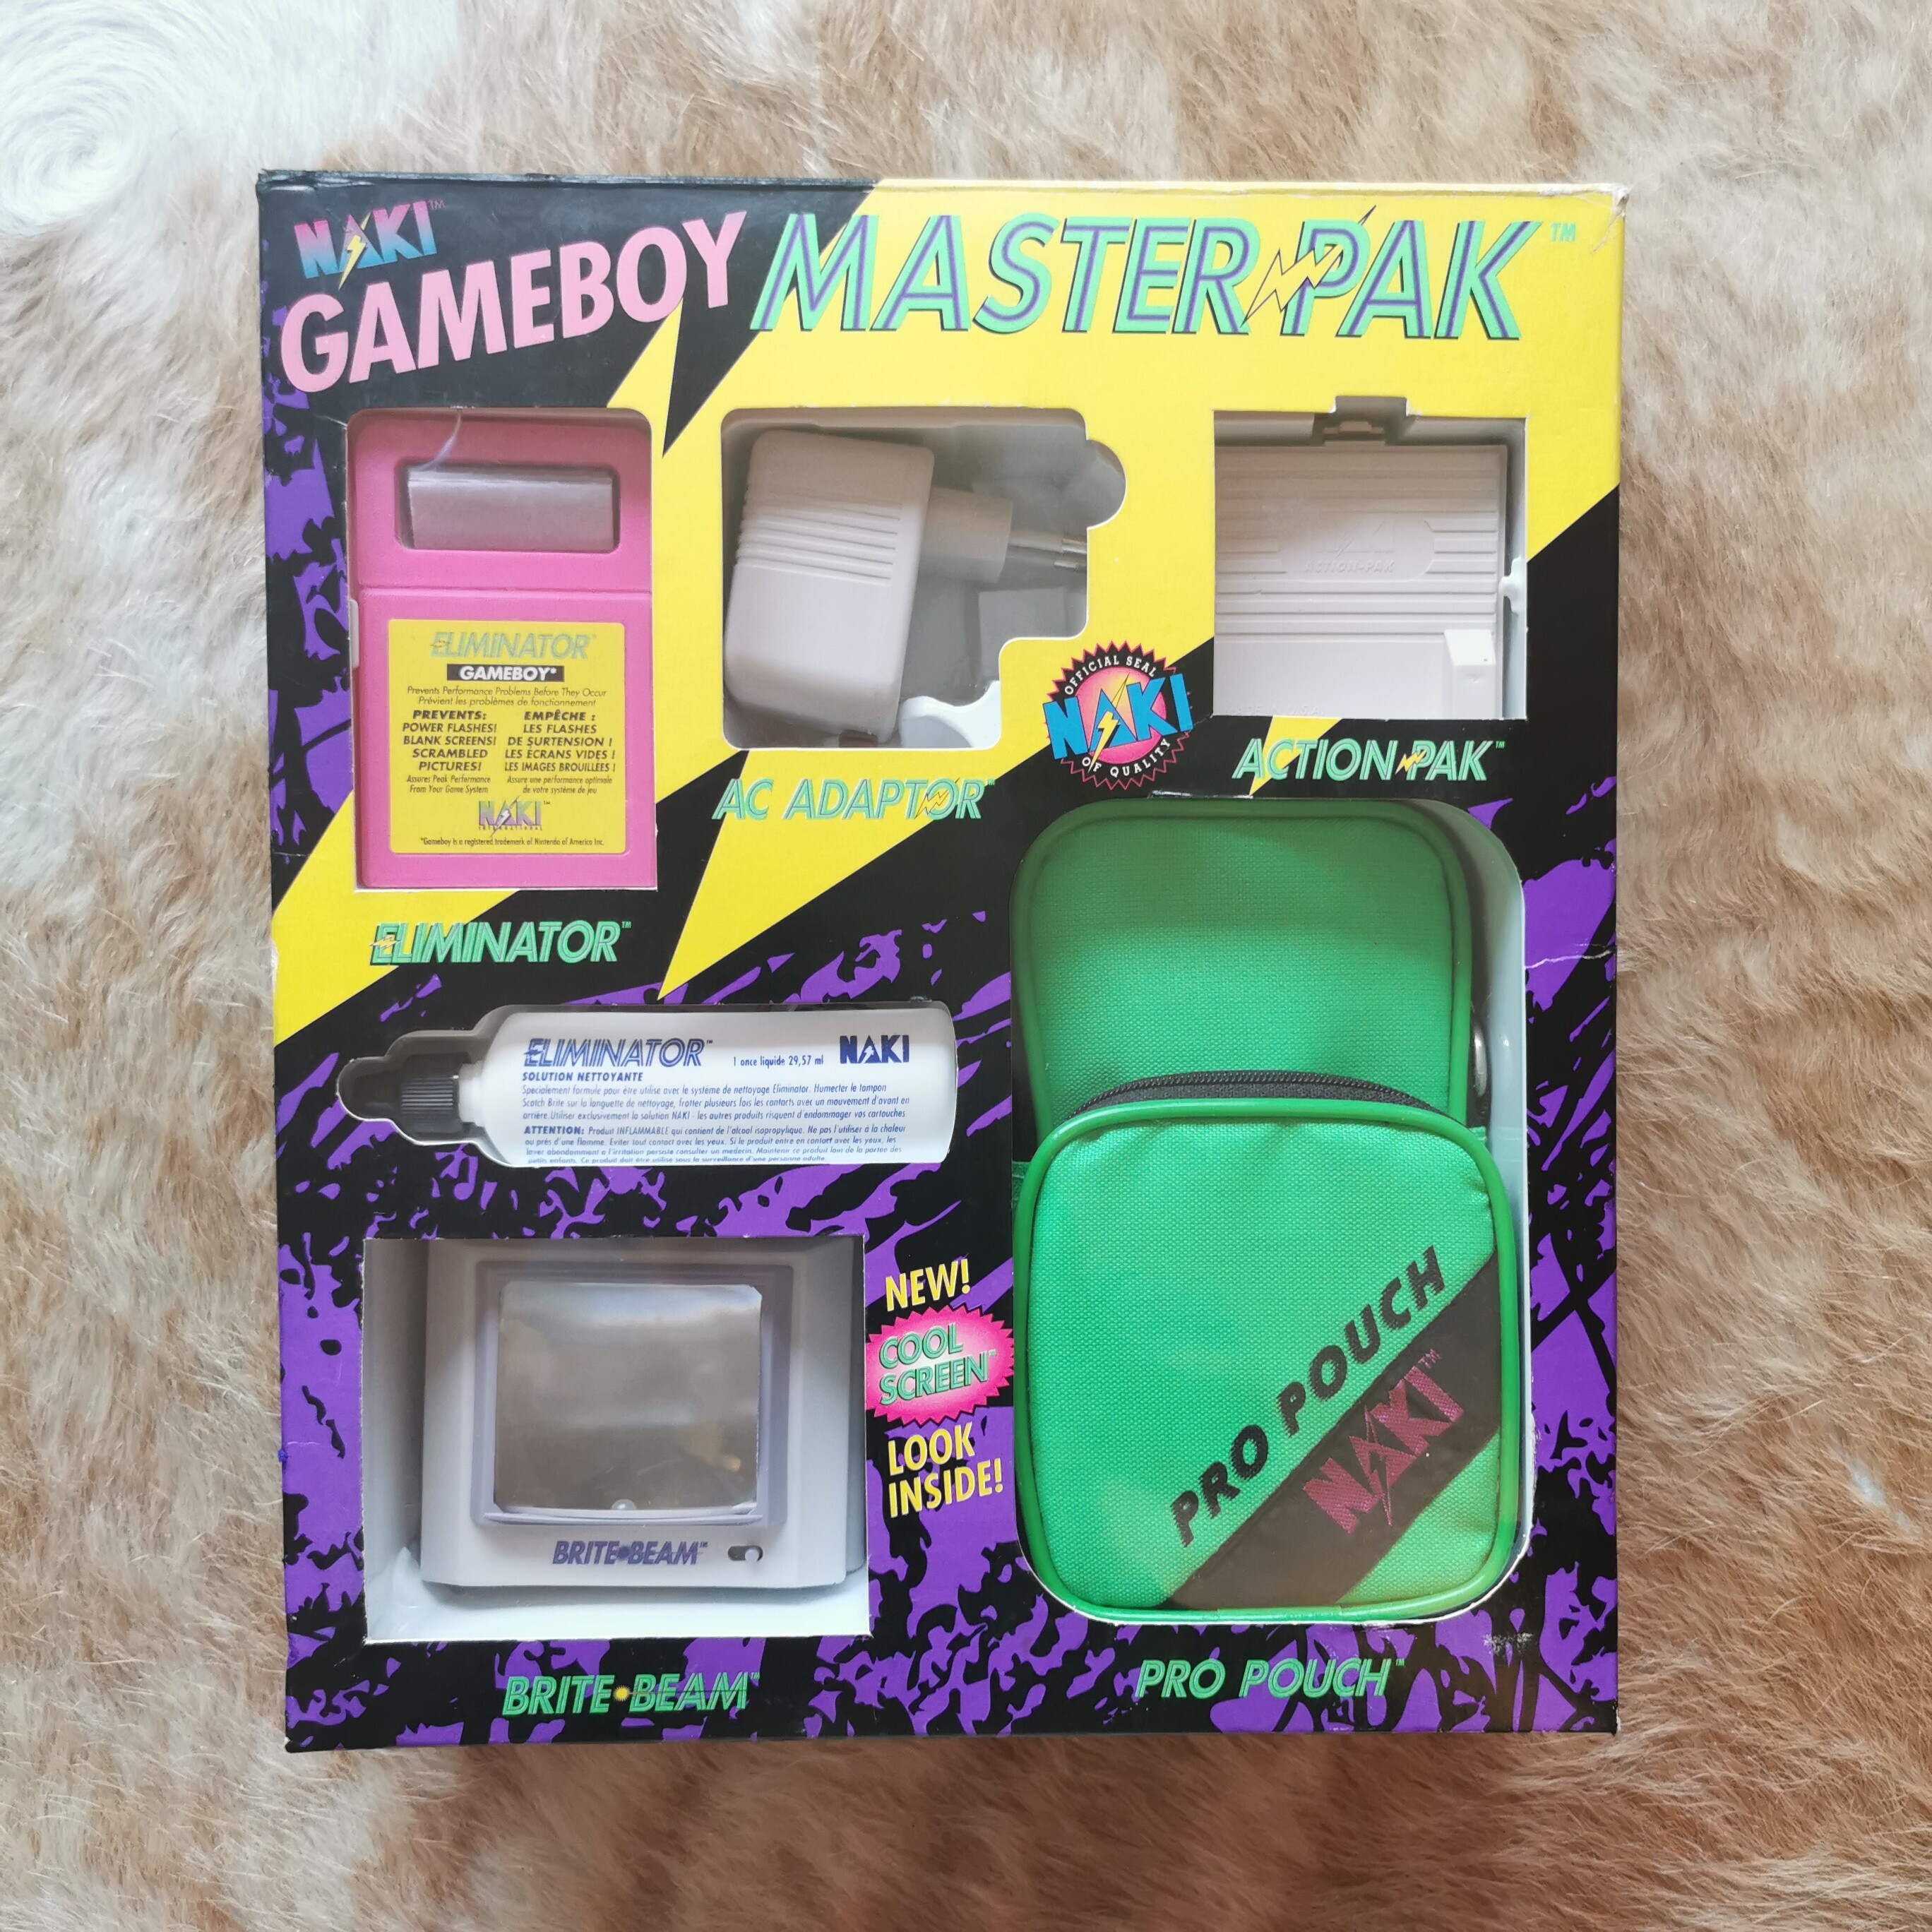  Naki Game Boy Master Pack